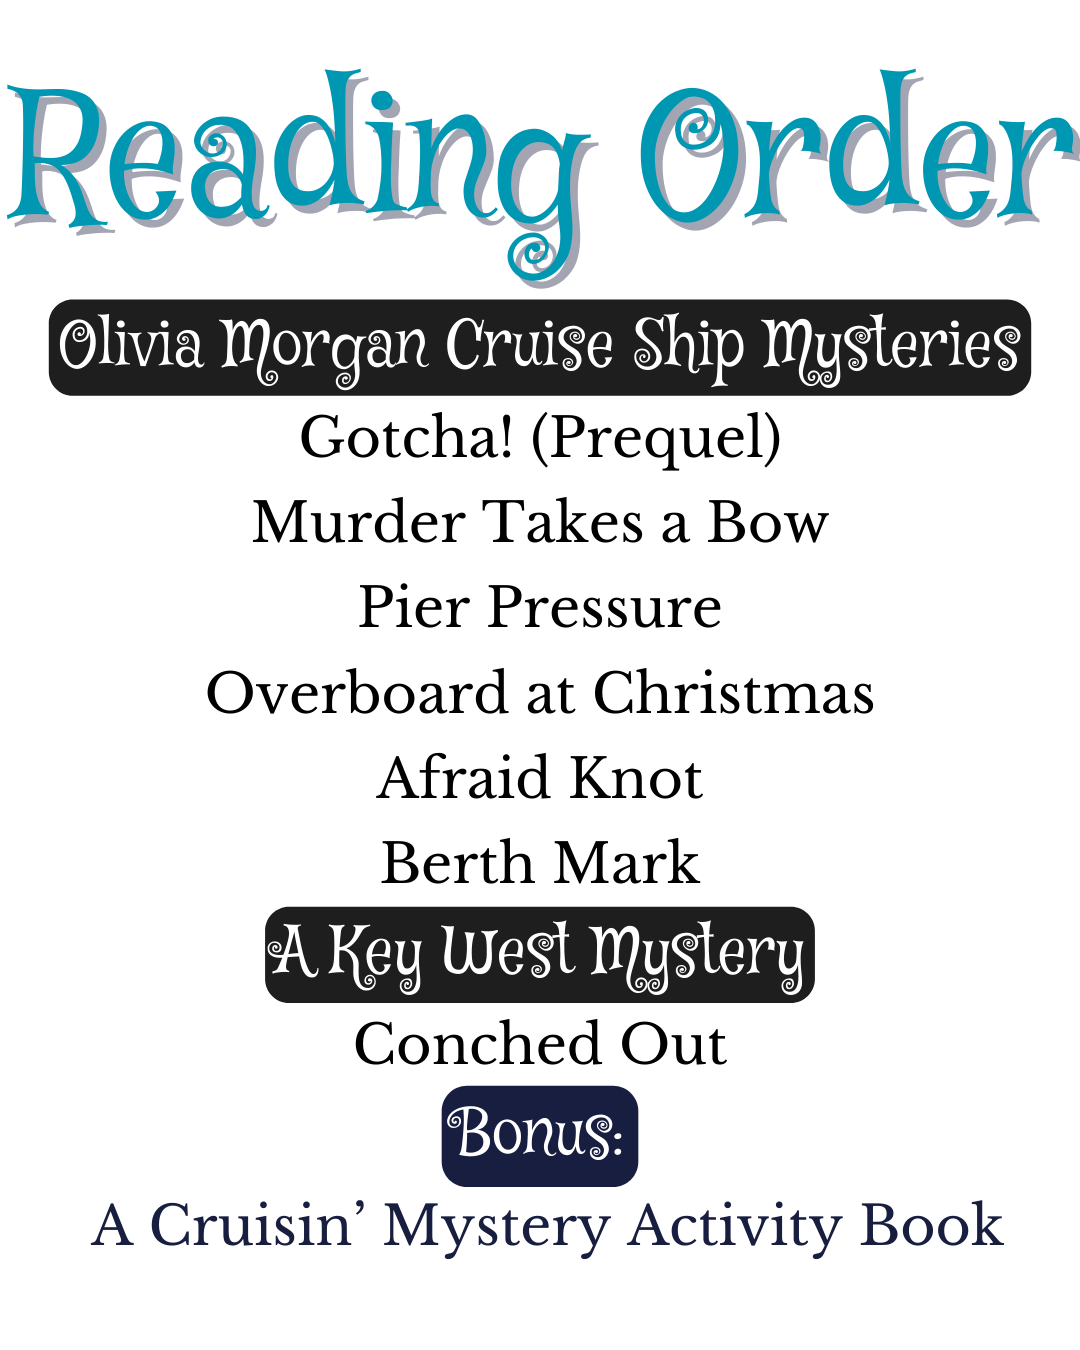 Olivia Morgan Cruise Ship Mysteries Hardcover Bundle